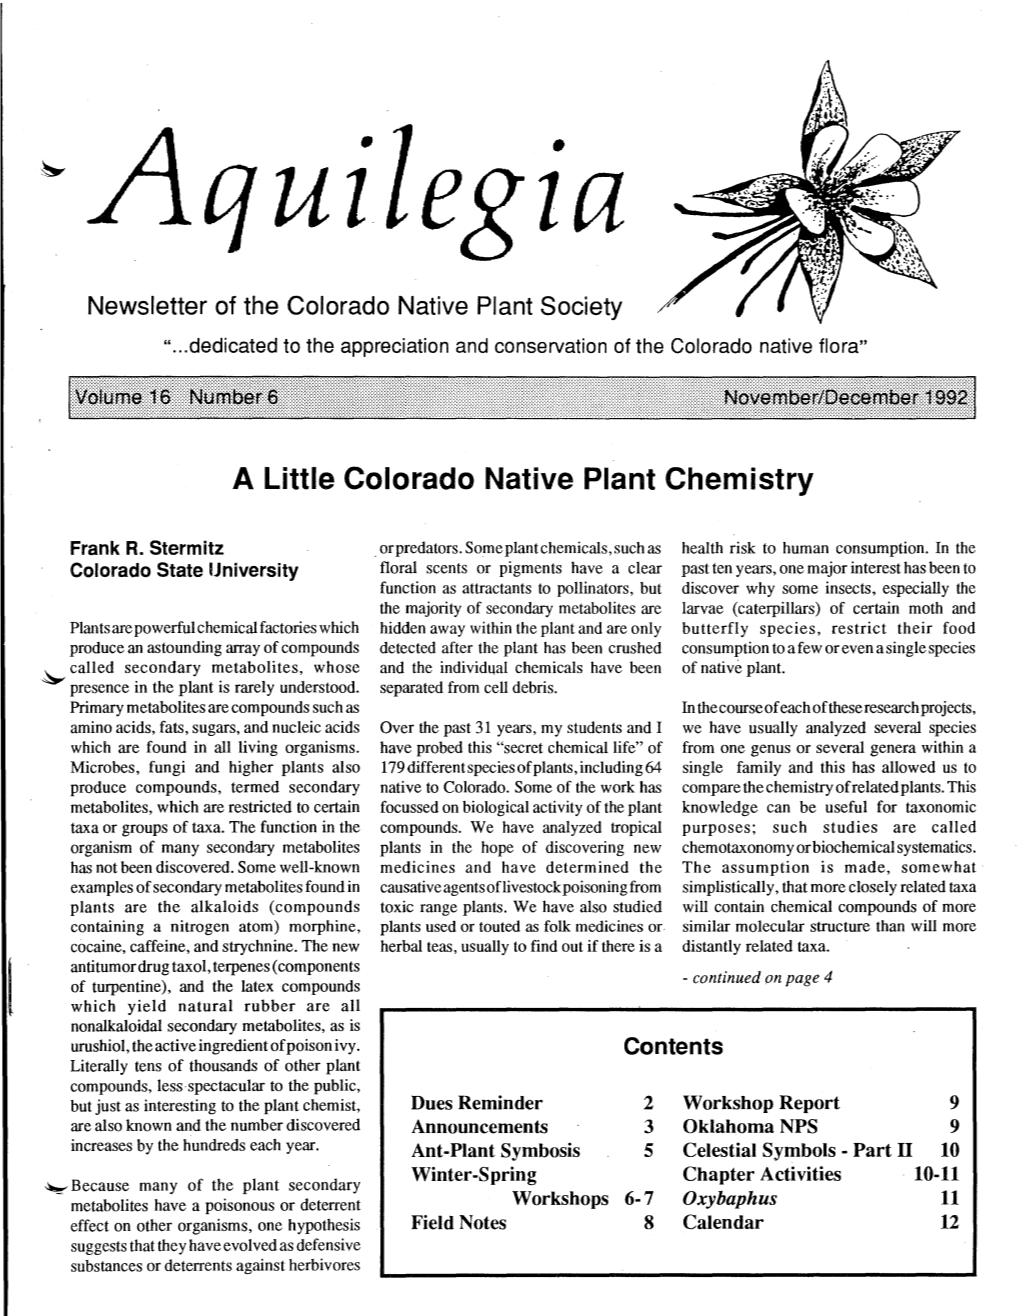 A Little Colorado Native Plant Chemistry